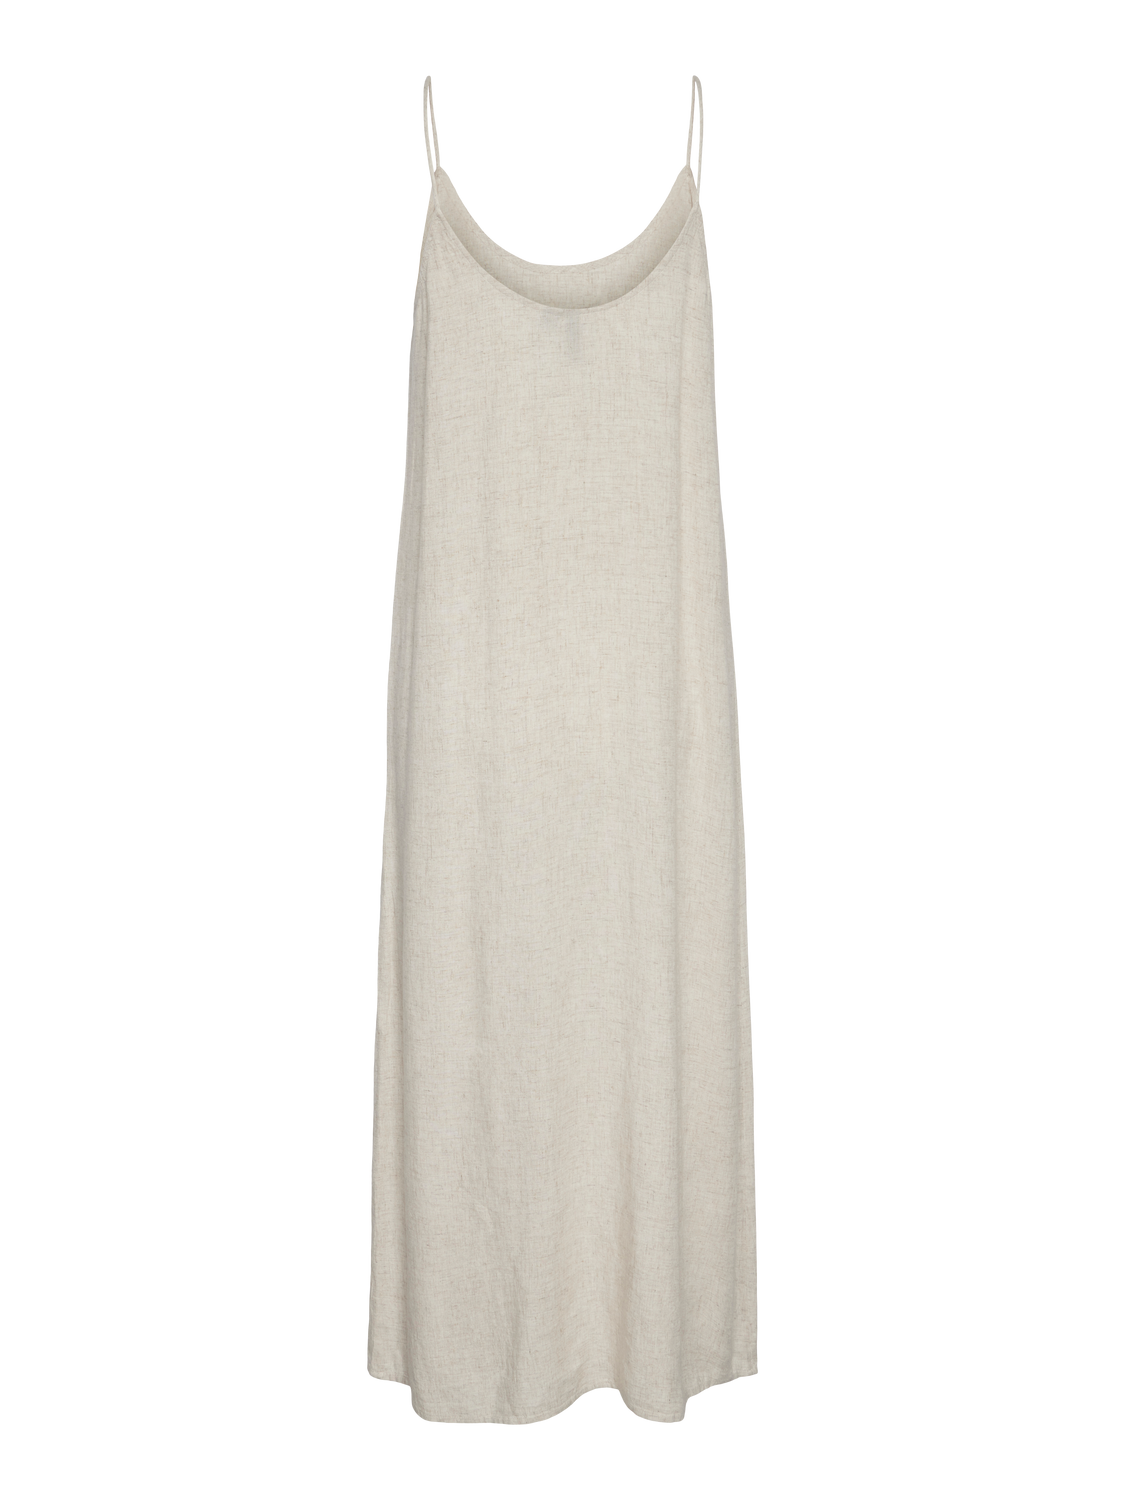 PCPIA Dress - Sandshell